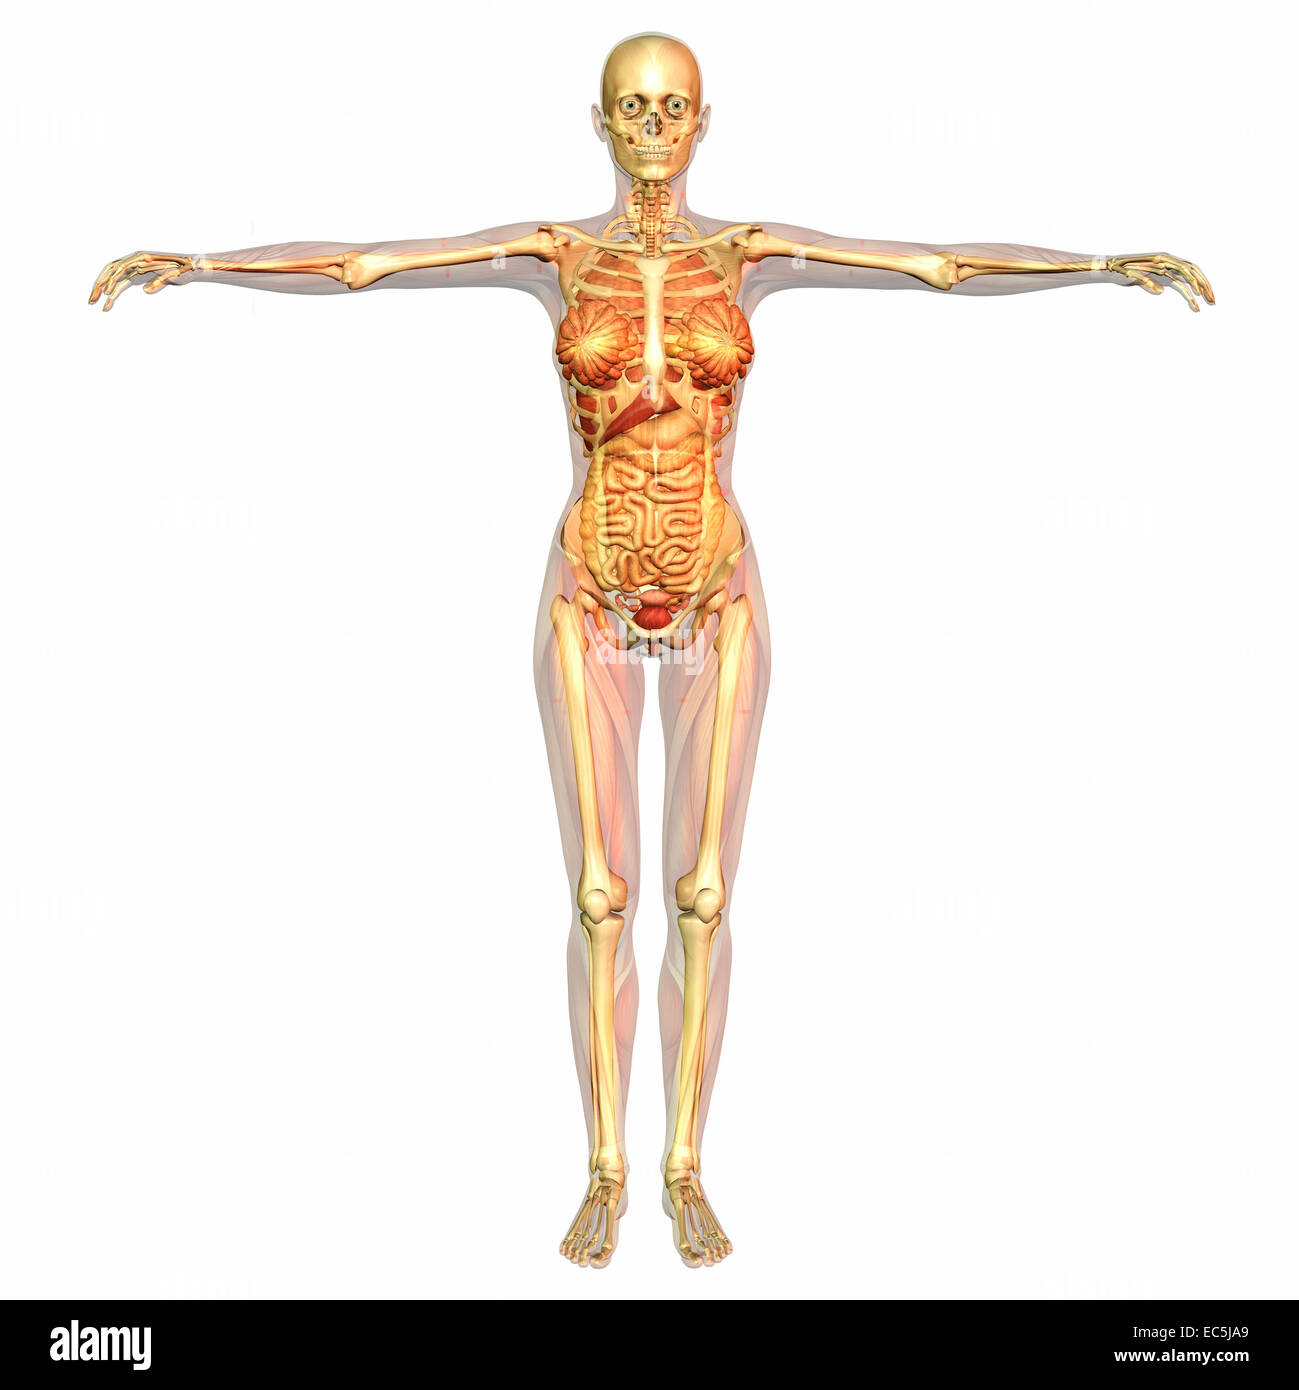 Digital visualization of human anatomy Stock Photo